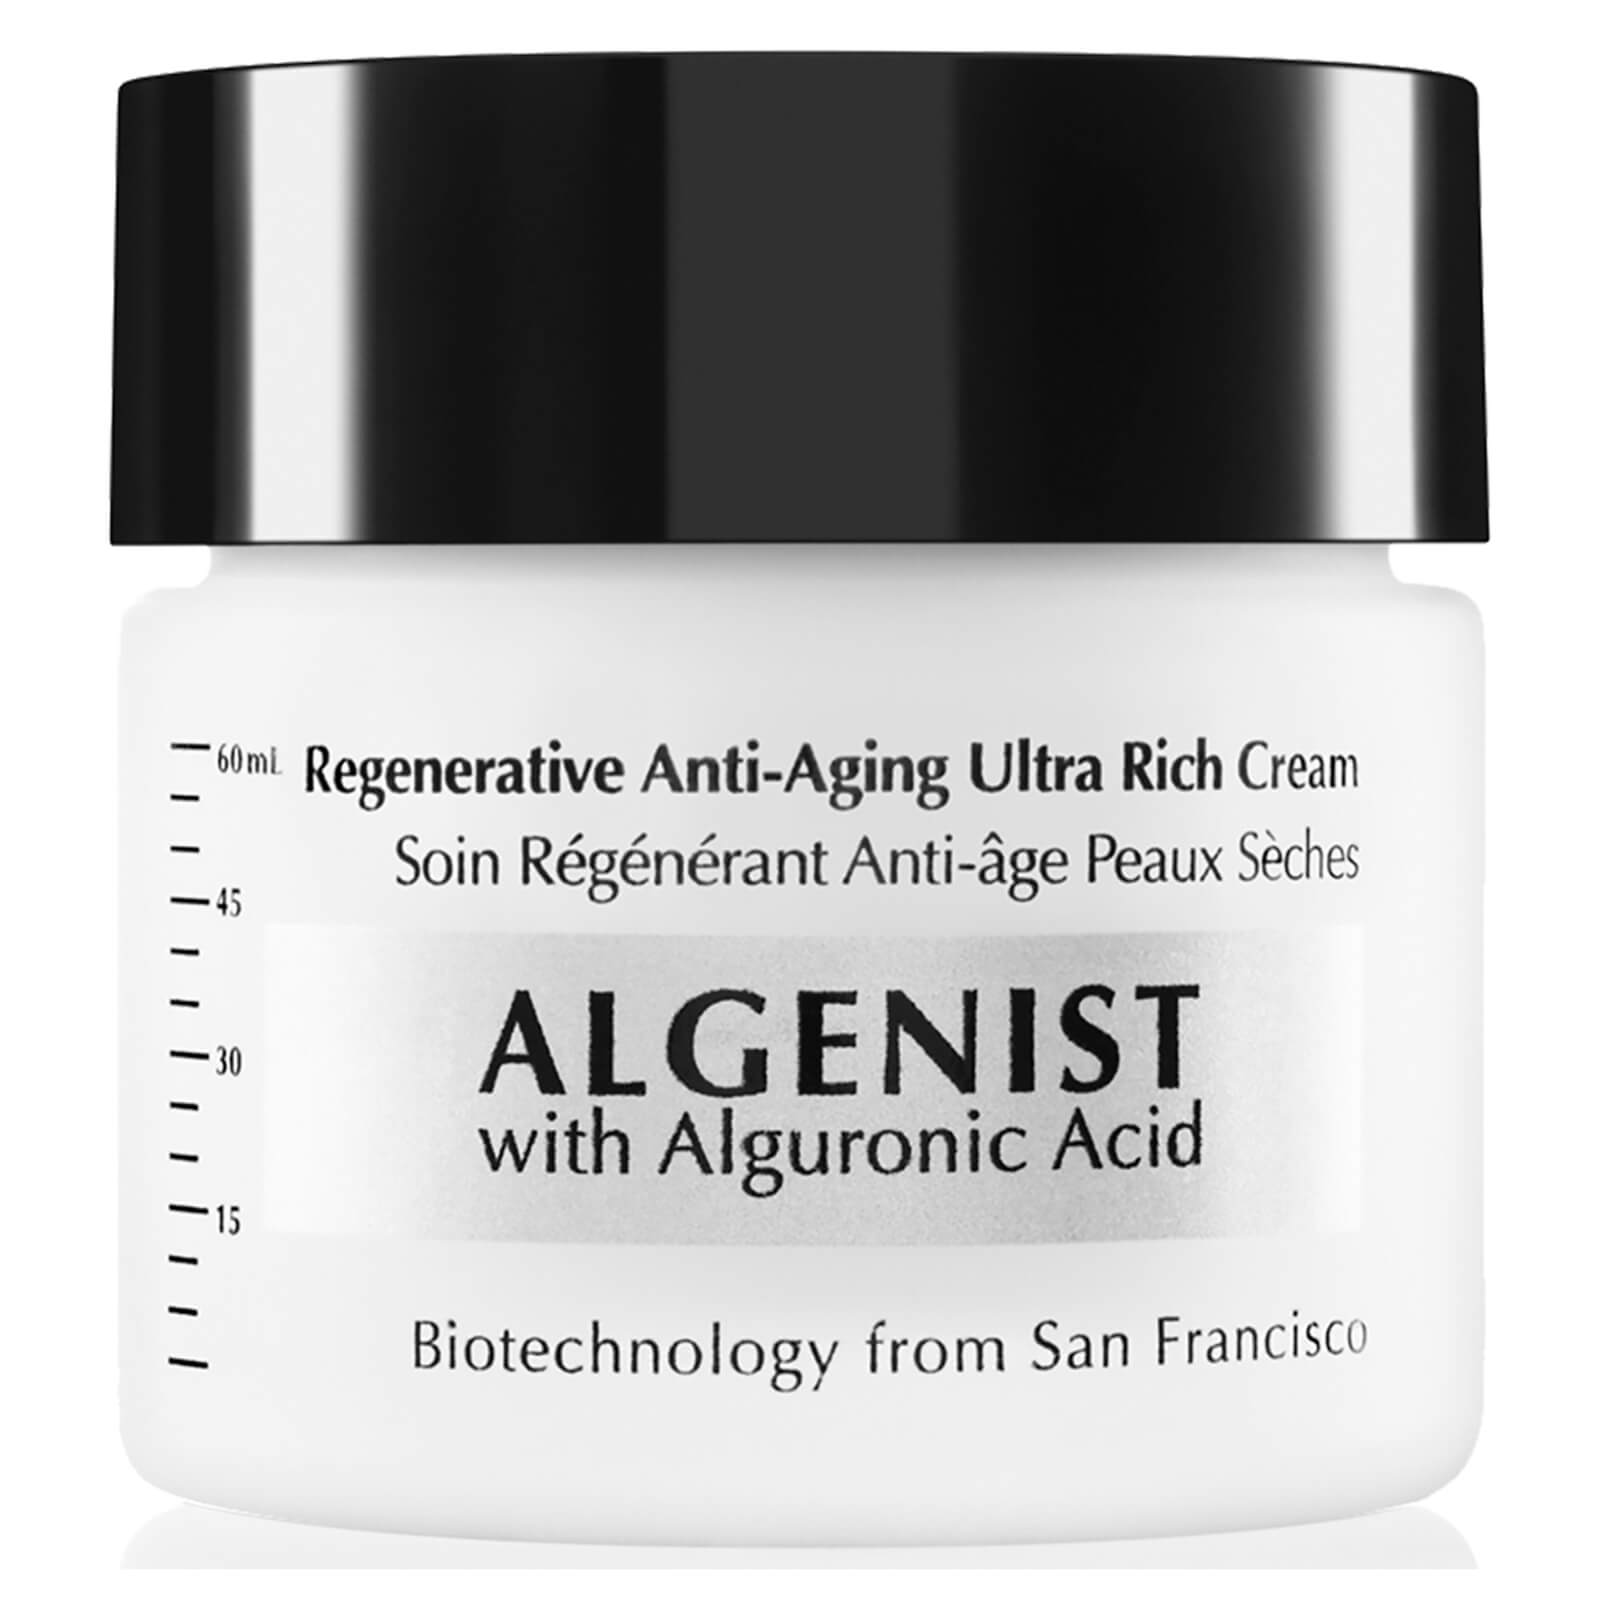 Crema ultradensa antienvejecimiento Regenerative de ALGENIST 60 ml